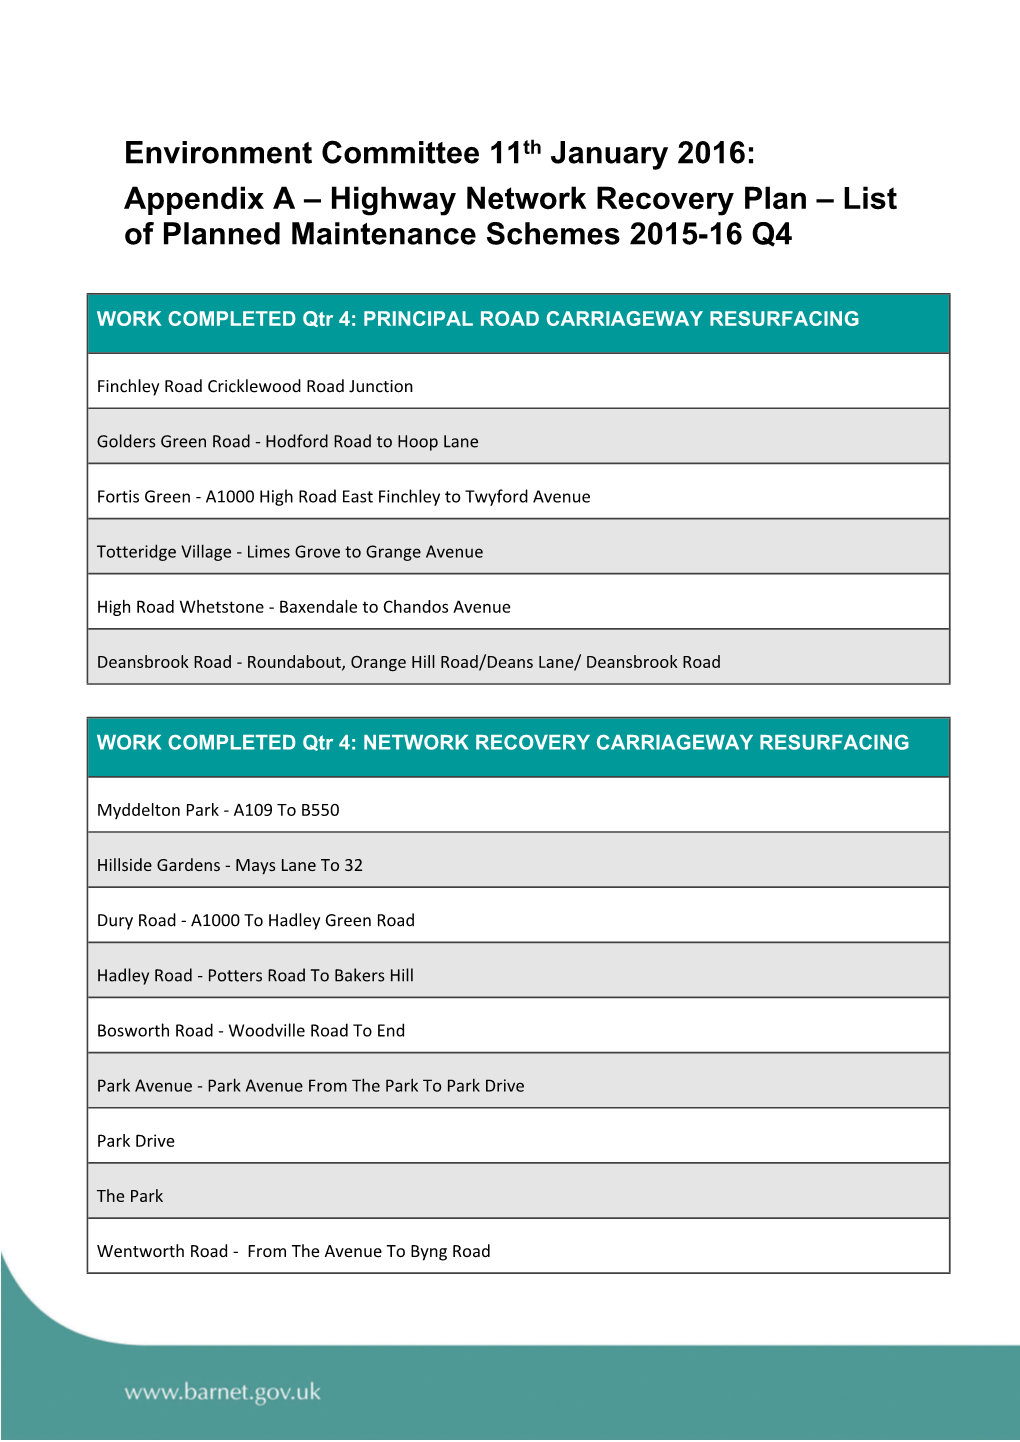 List of Planned Maintenance Schemes 2015-16 Q4